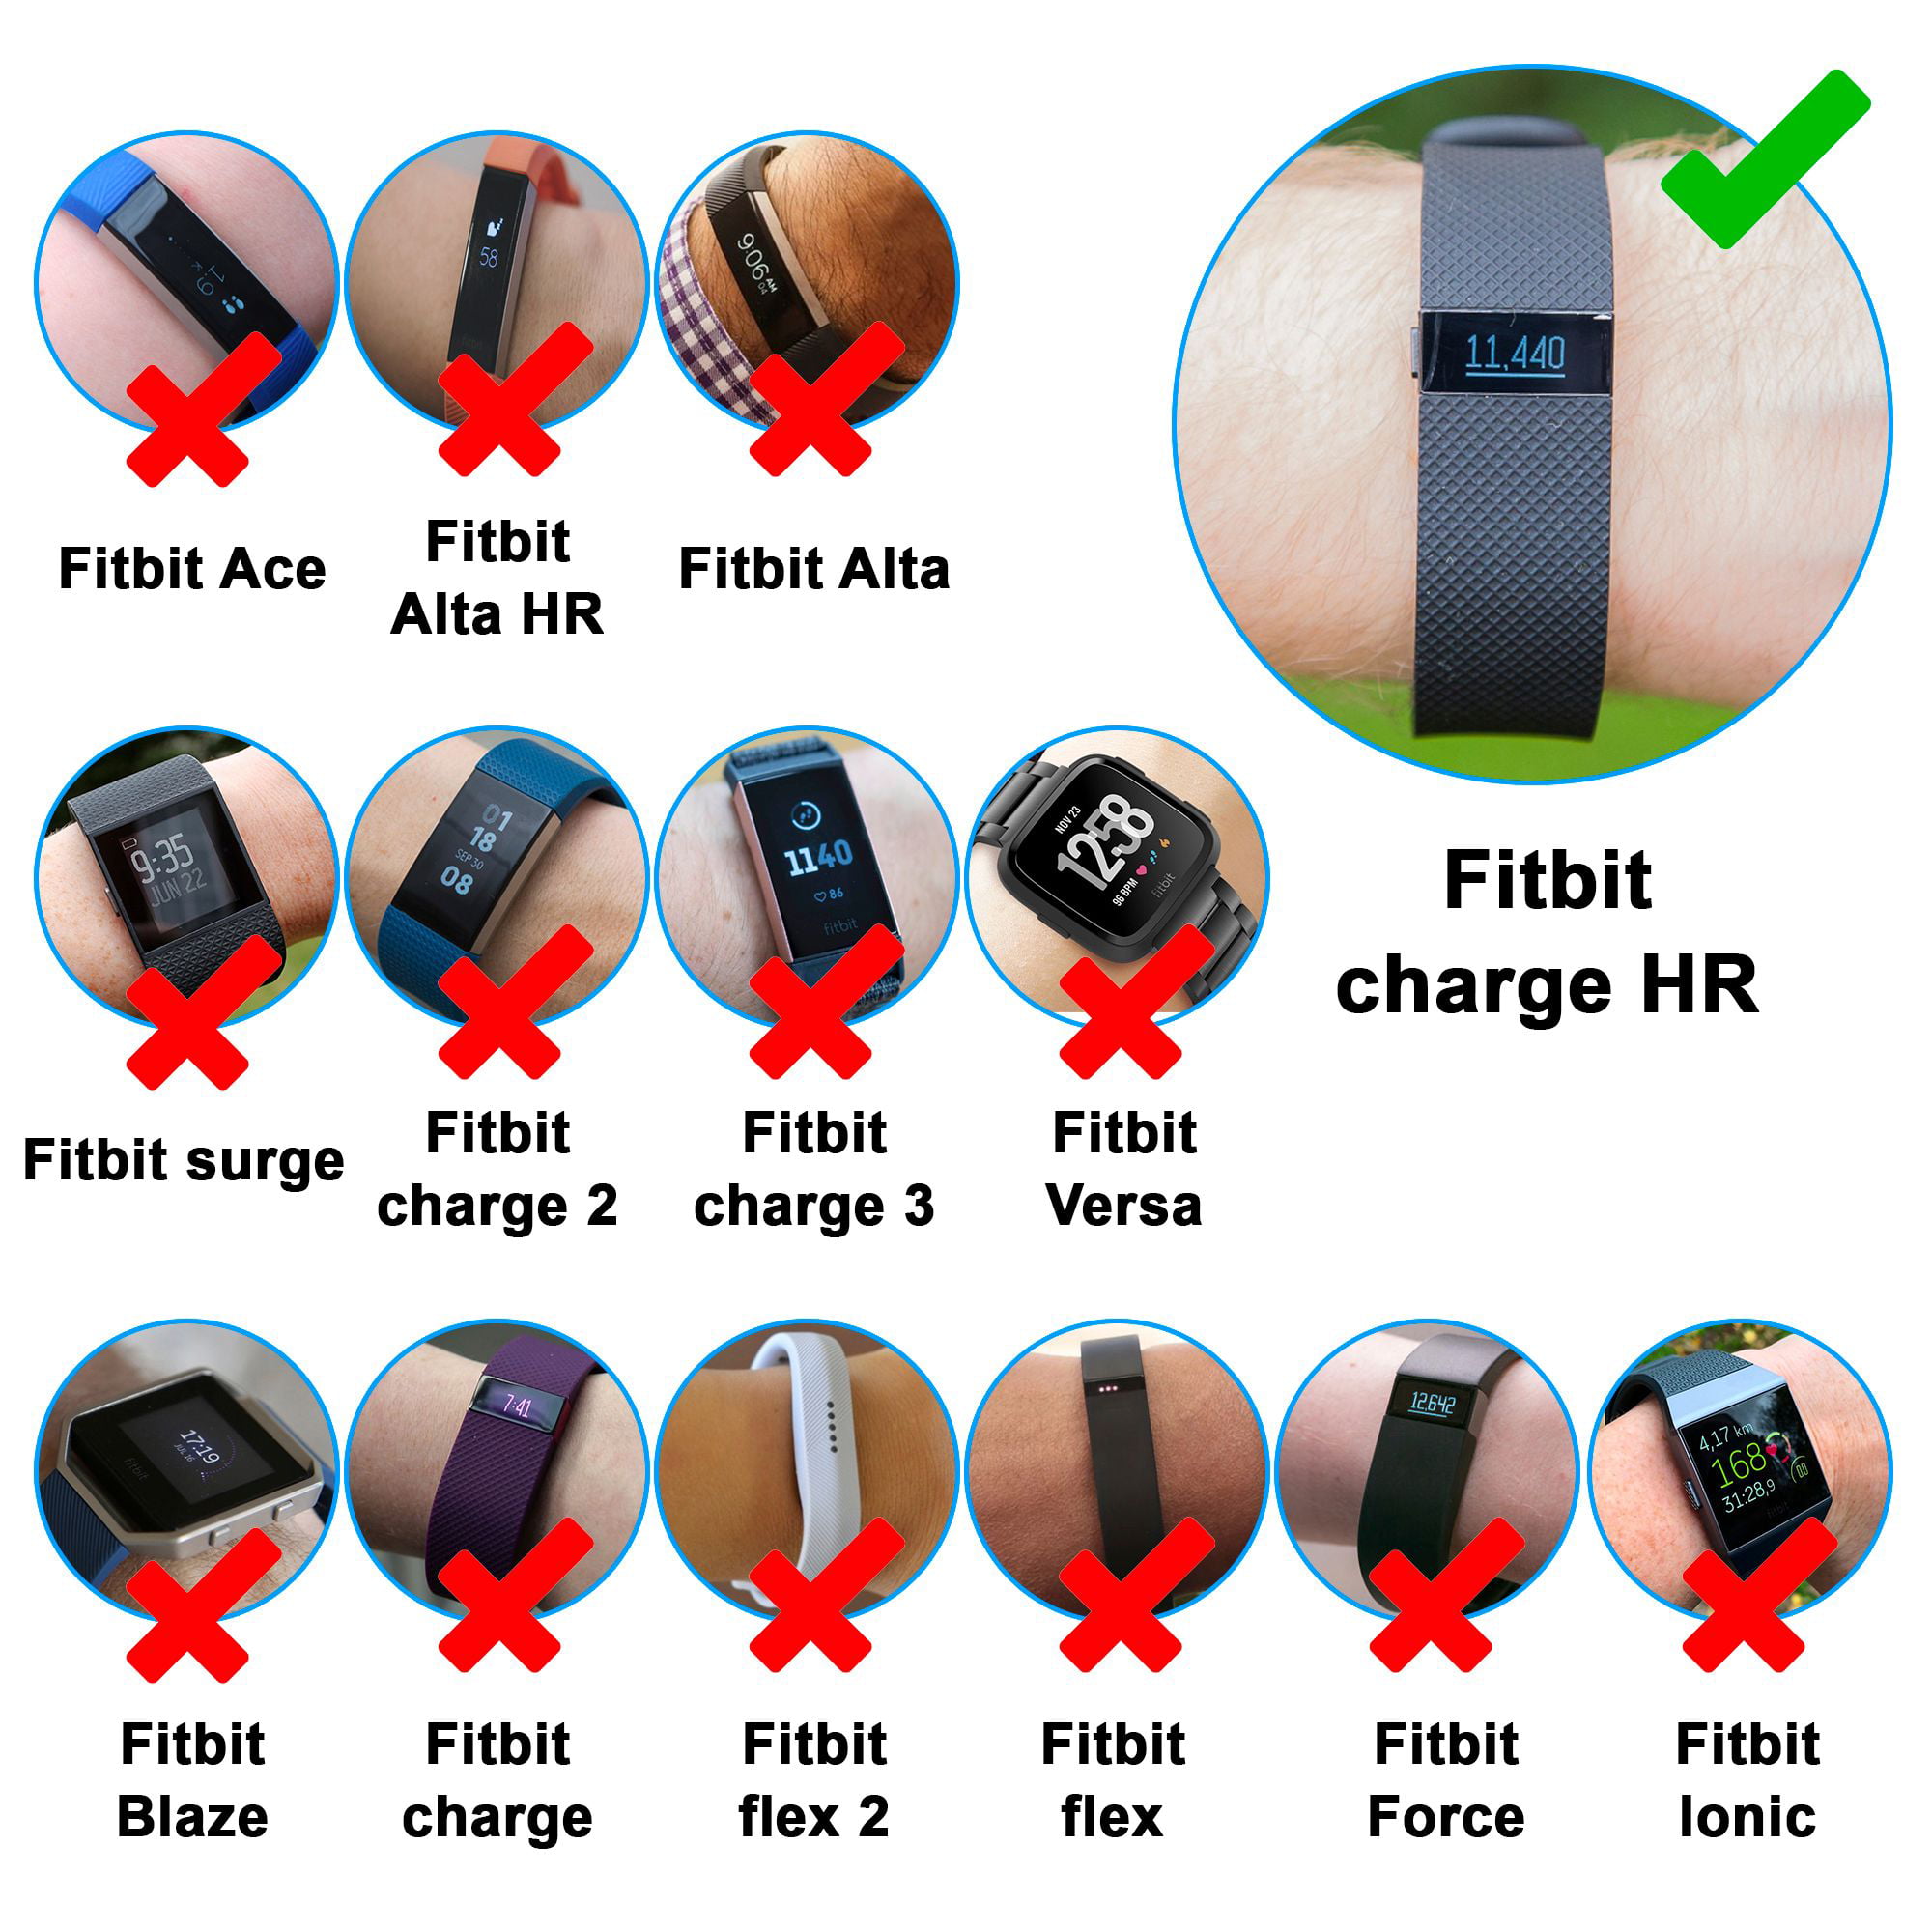 fitbit wireless activity tracker wristband